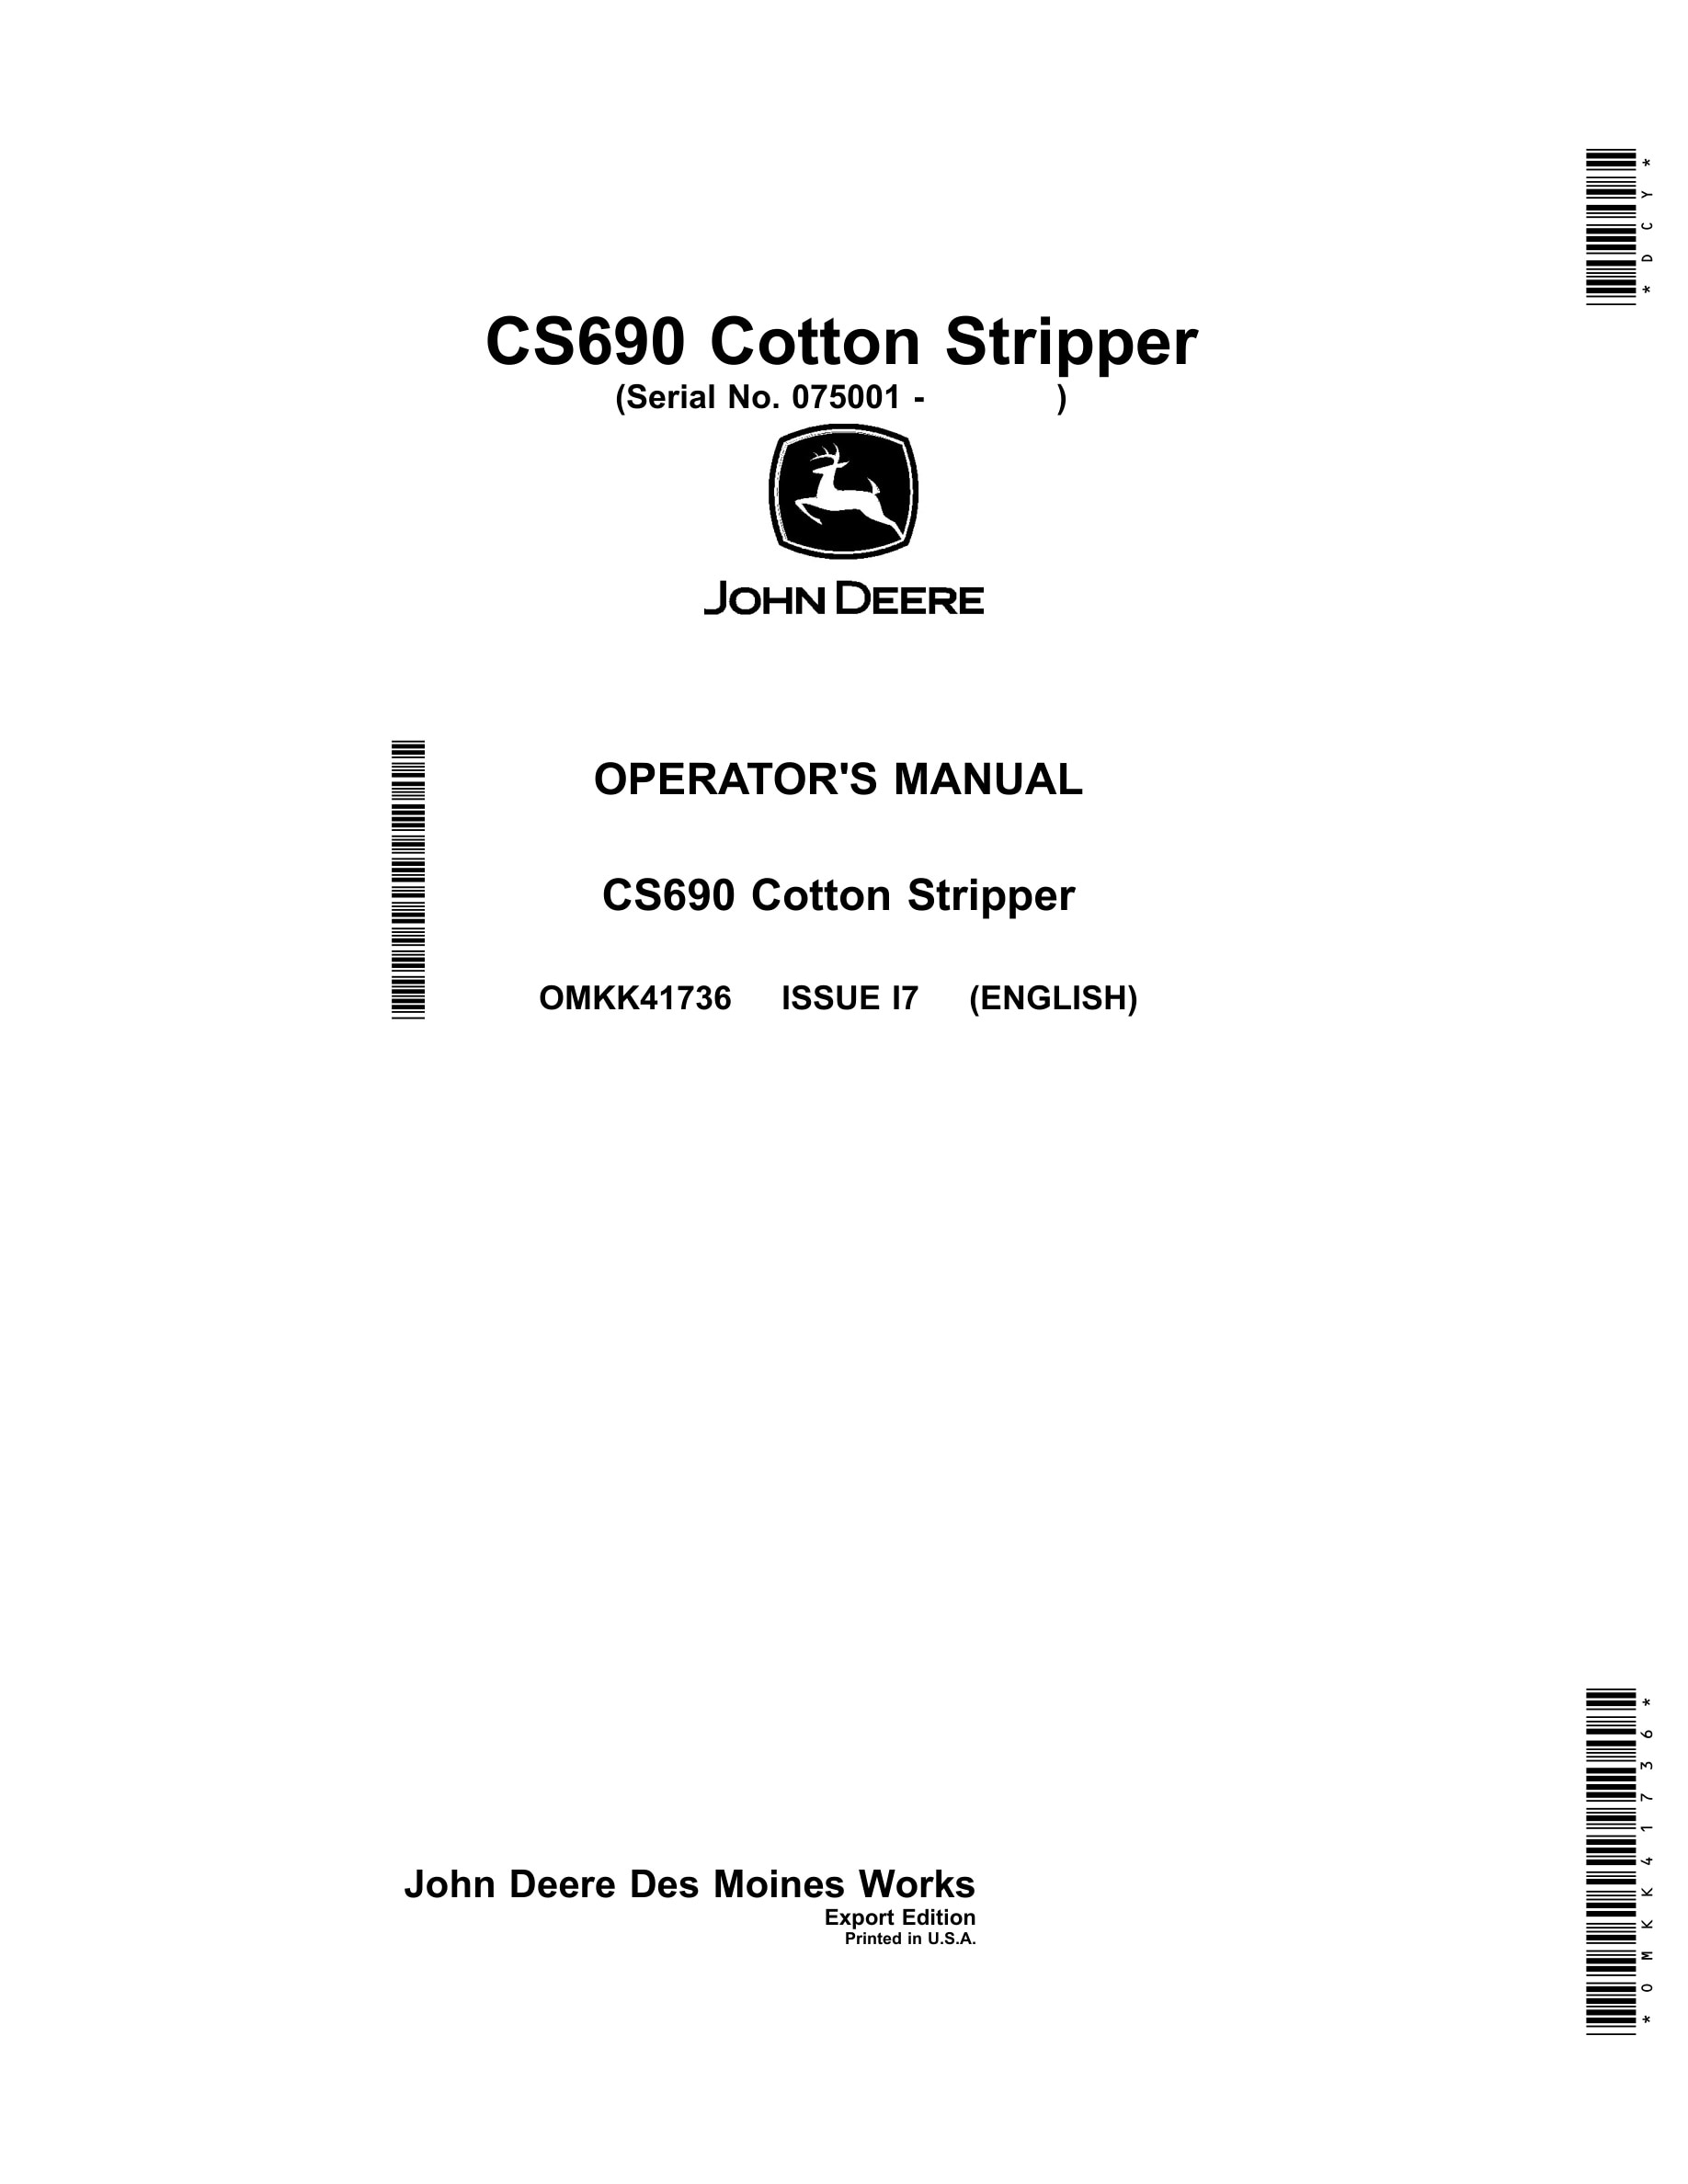 John Deere CS690 Cotton Stripper Operator Manual OMKK41736-1